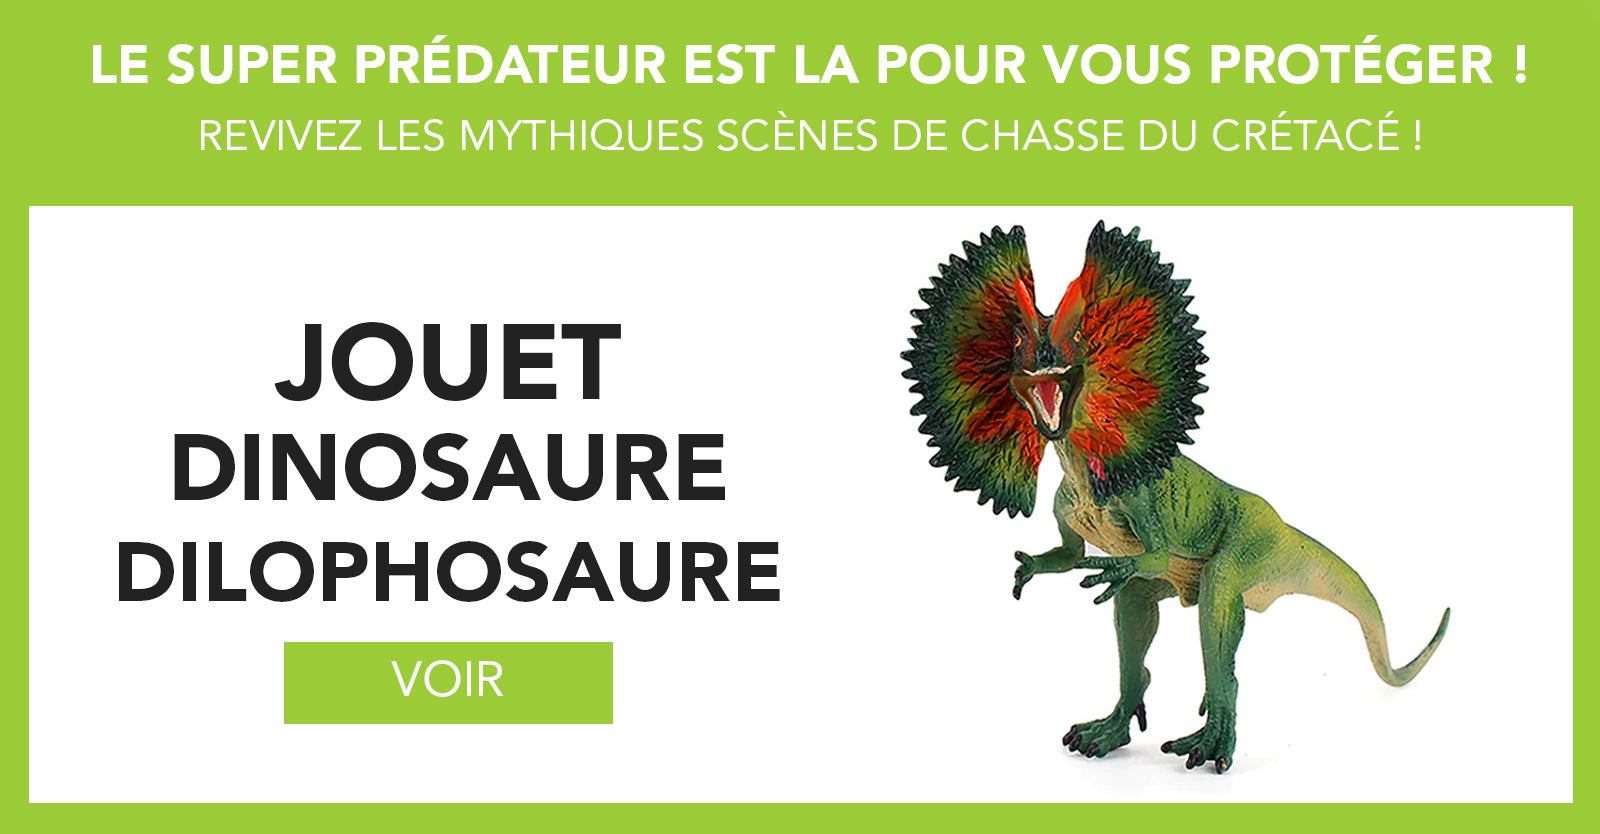 Jouet Dinosaure dilophosaure